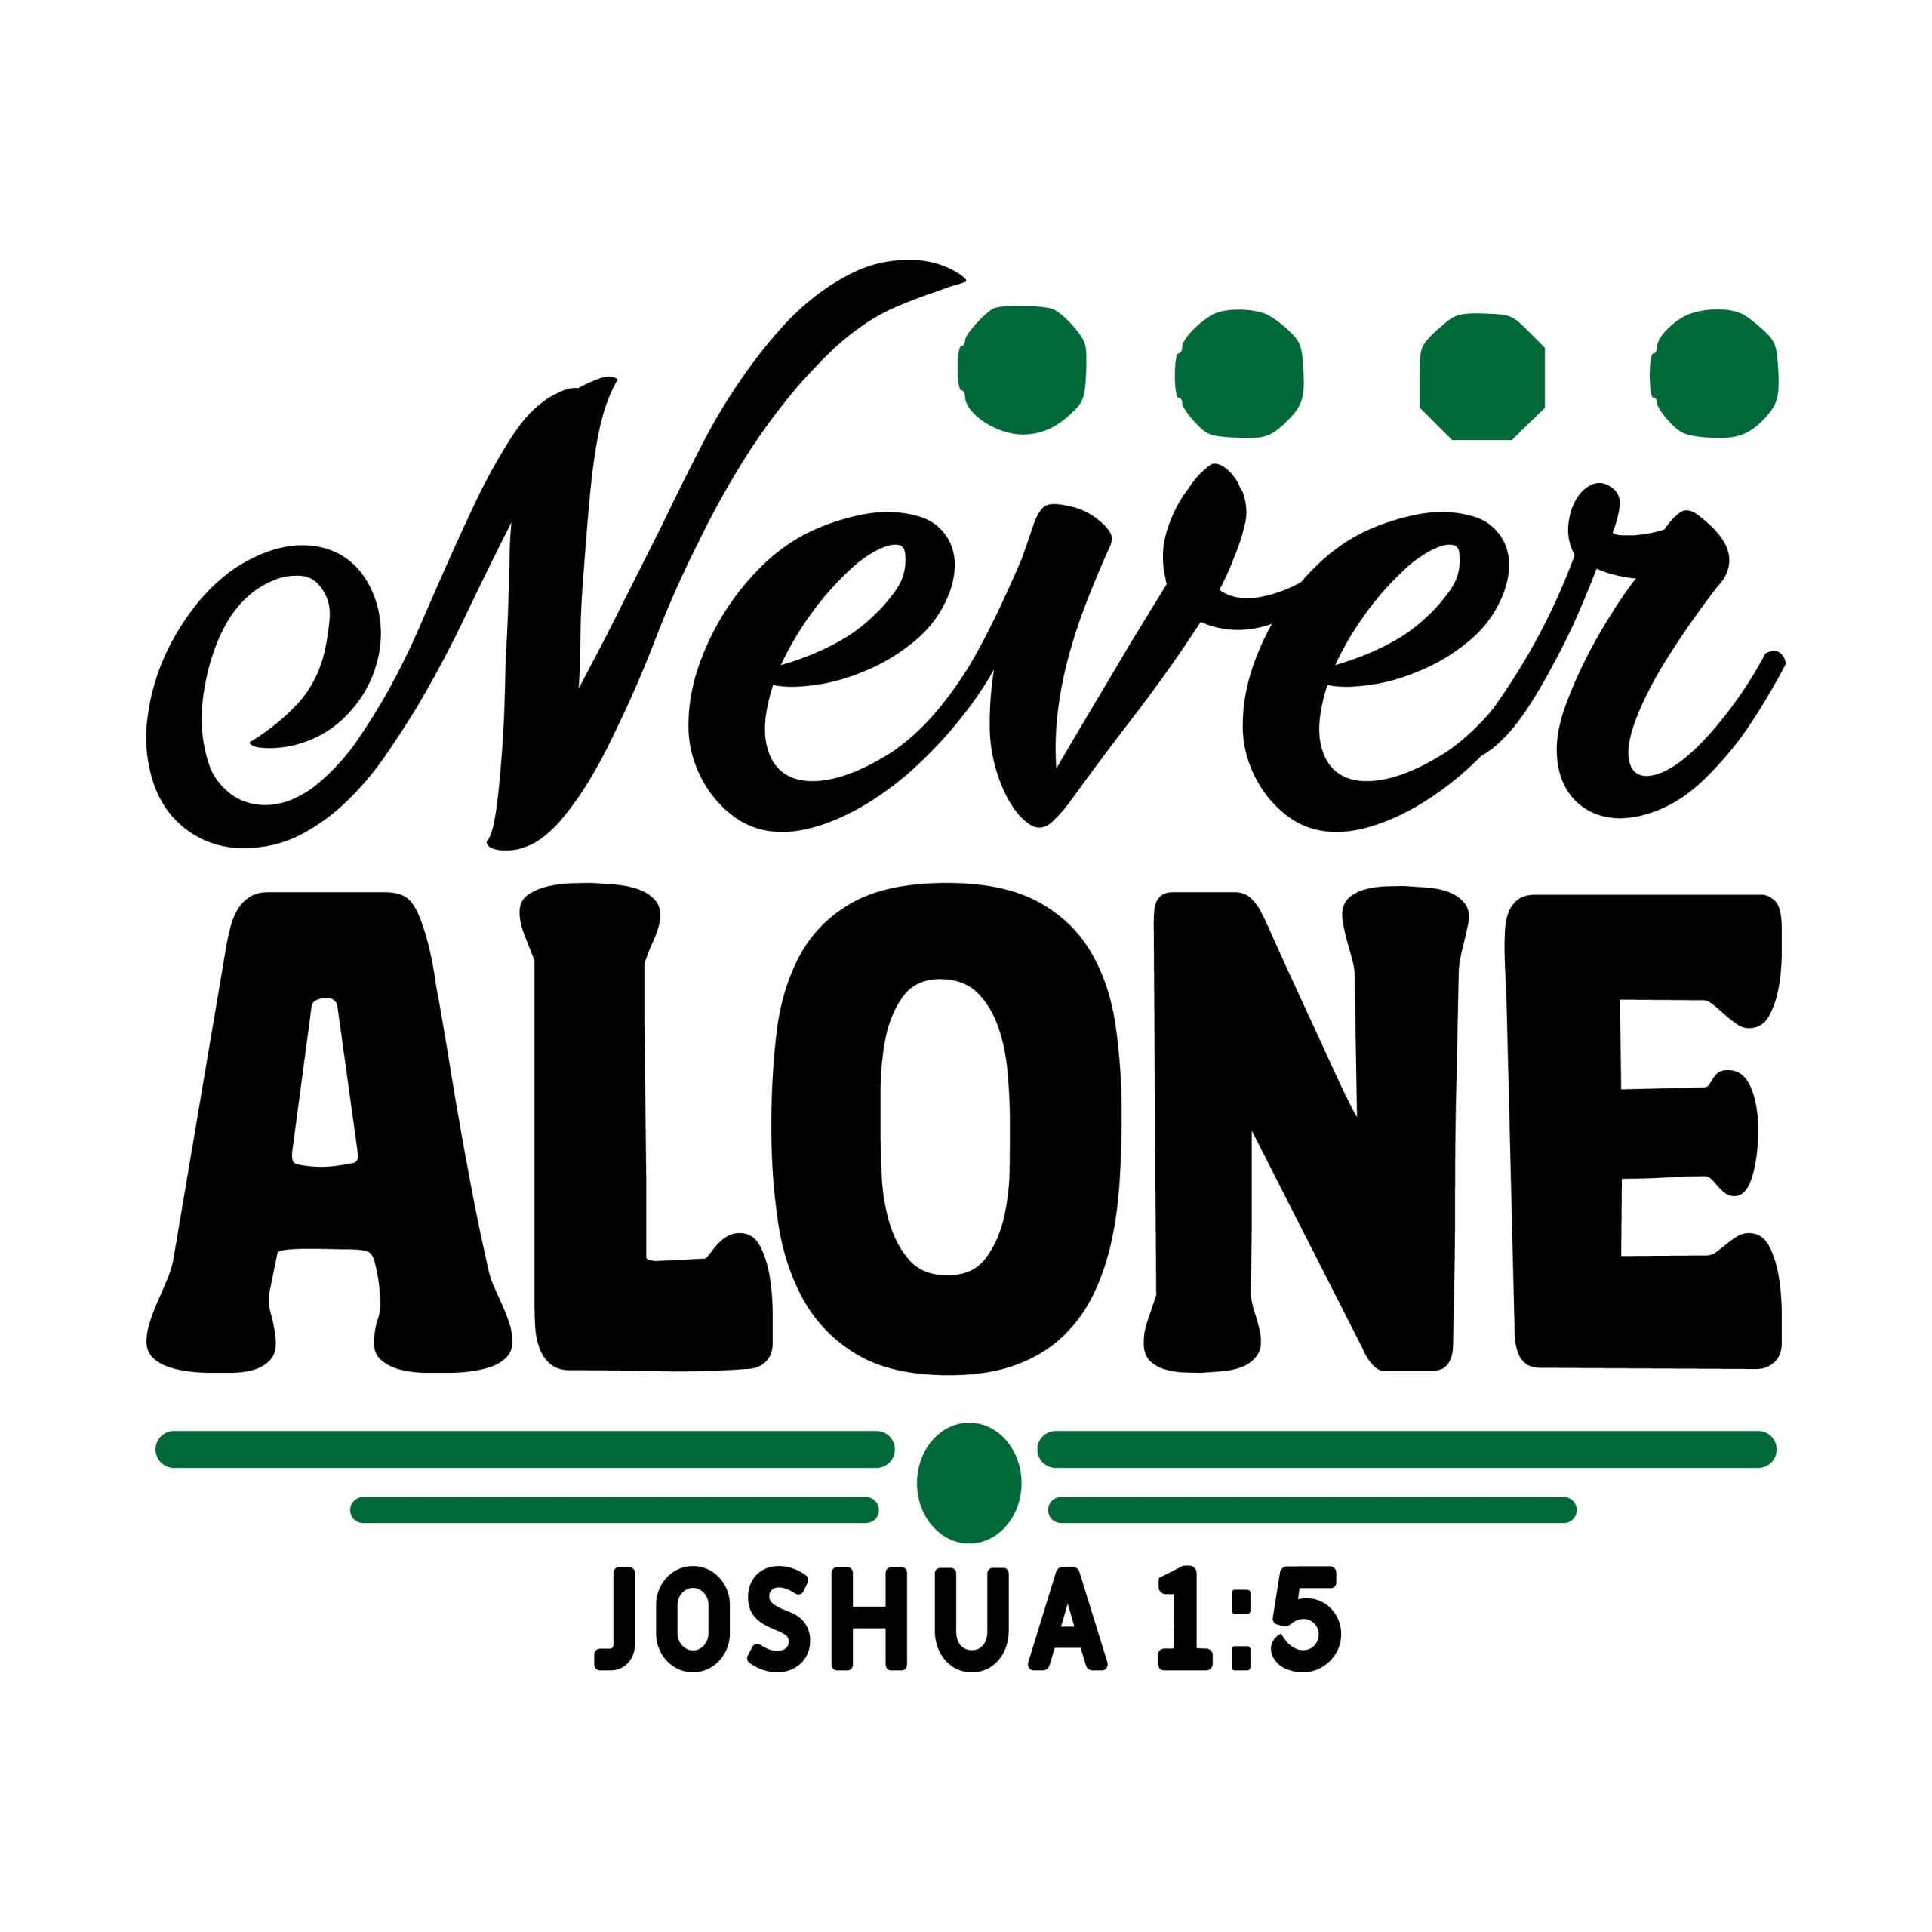 Never alone Joshua 1:5, bible verses, scripture verses, svg files, passages, sayings, cricut designs, silhouette, embroidery, bundle, free cut files, design space, vector